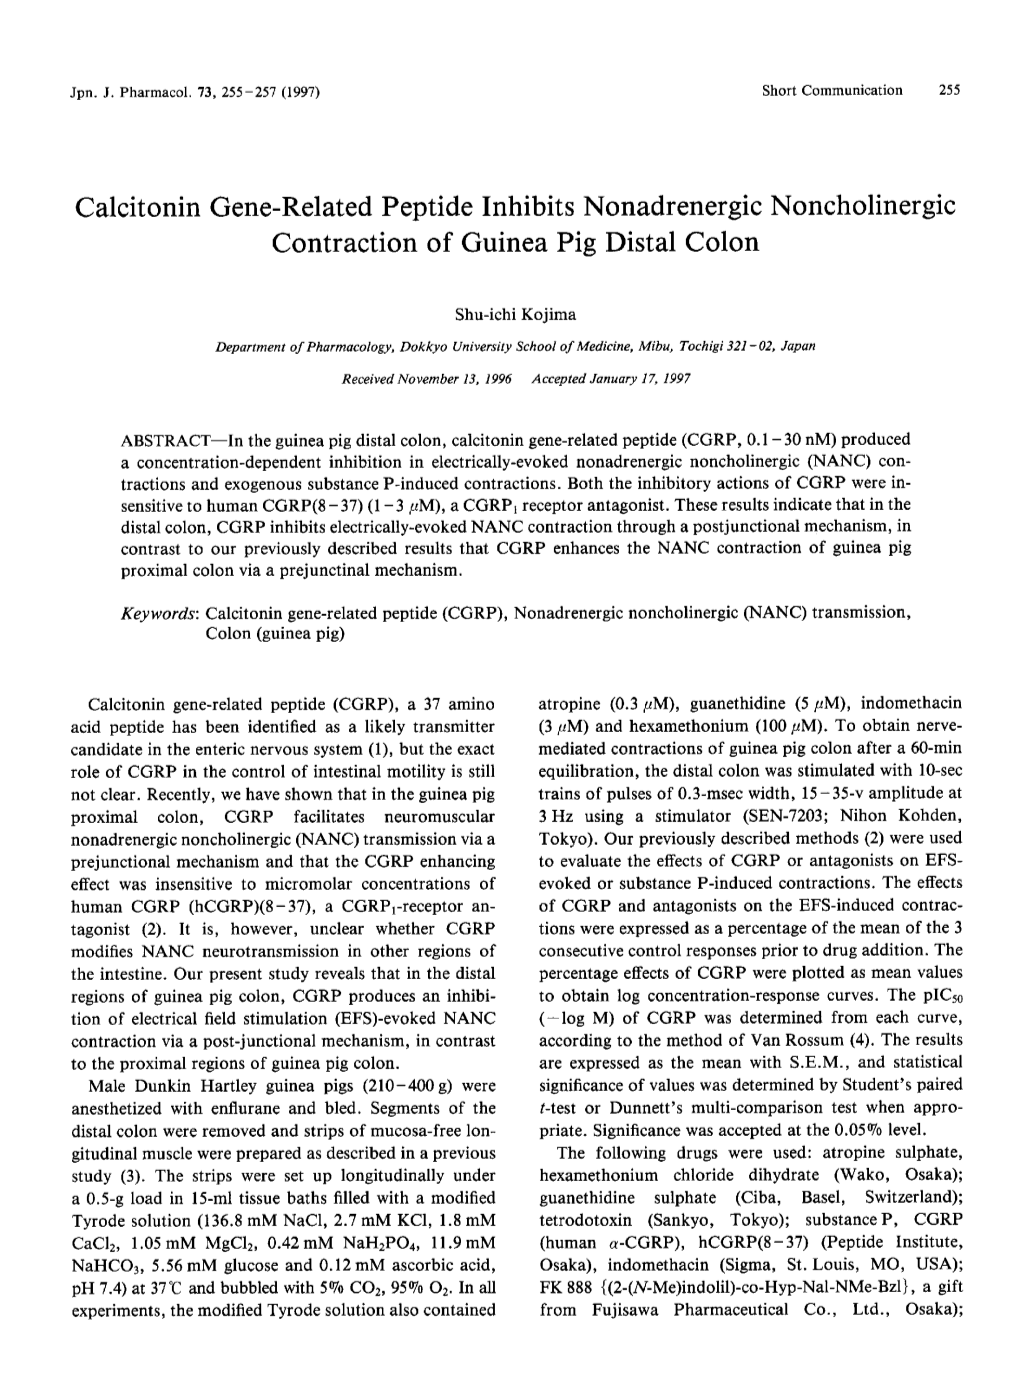 Calcitonin Gene-Related Peptide Inhibits Nonadrenergic Noncholinergic Contraction of Guinea Pig Distal Colon